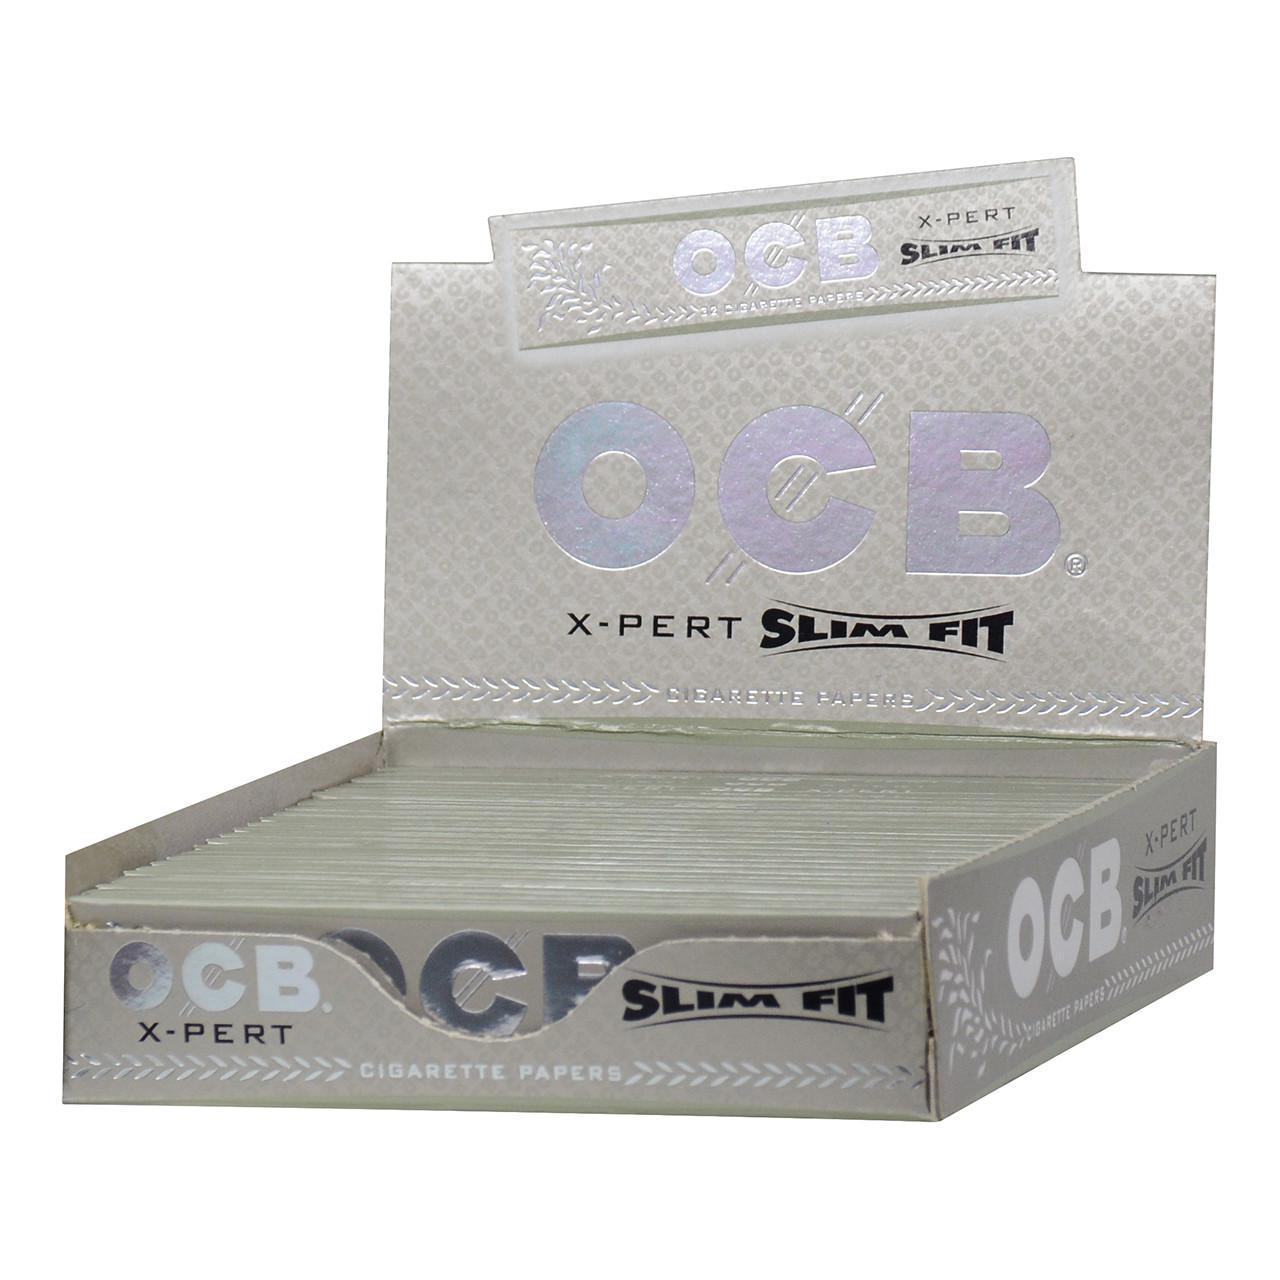 OCB X-PERT Slimm Fit Roling Papers